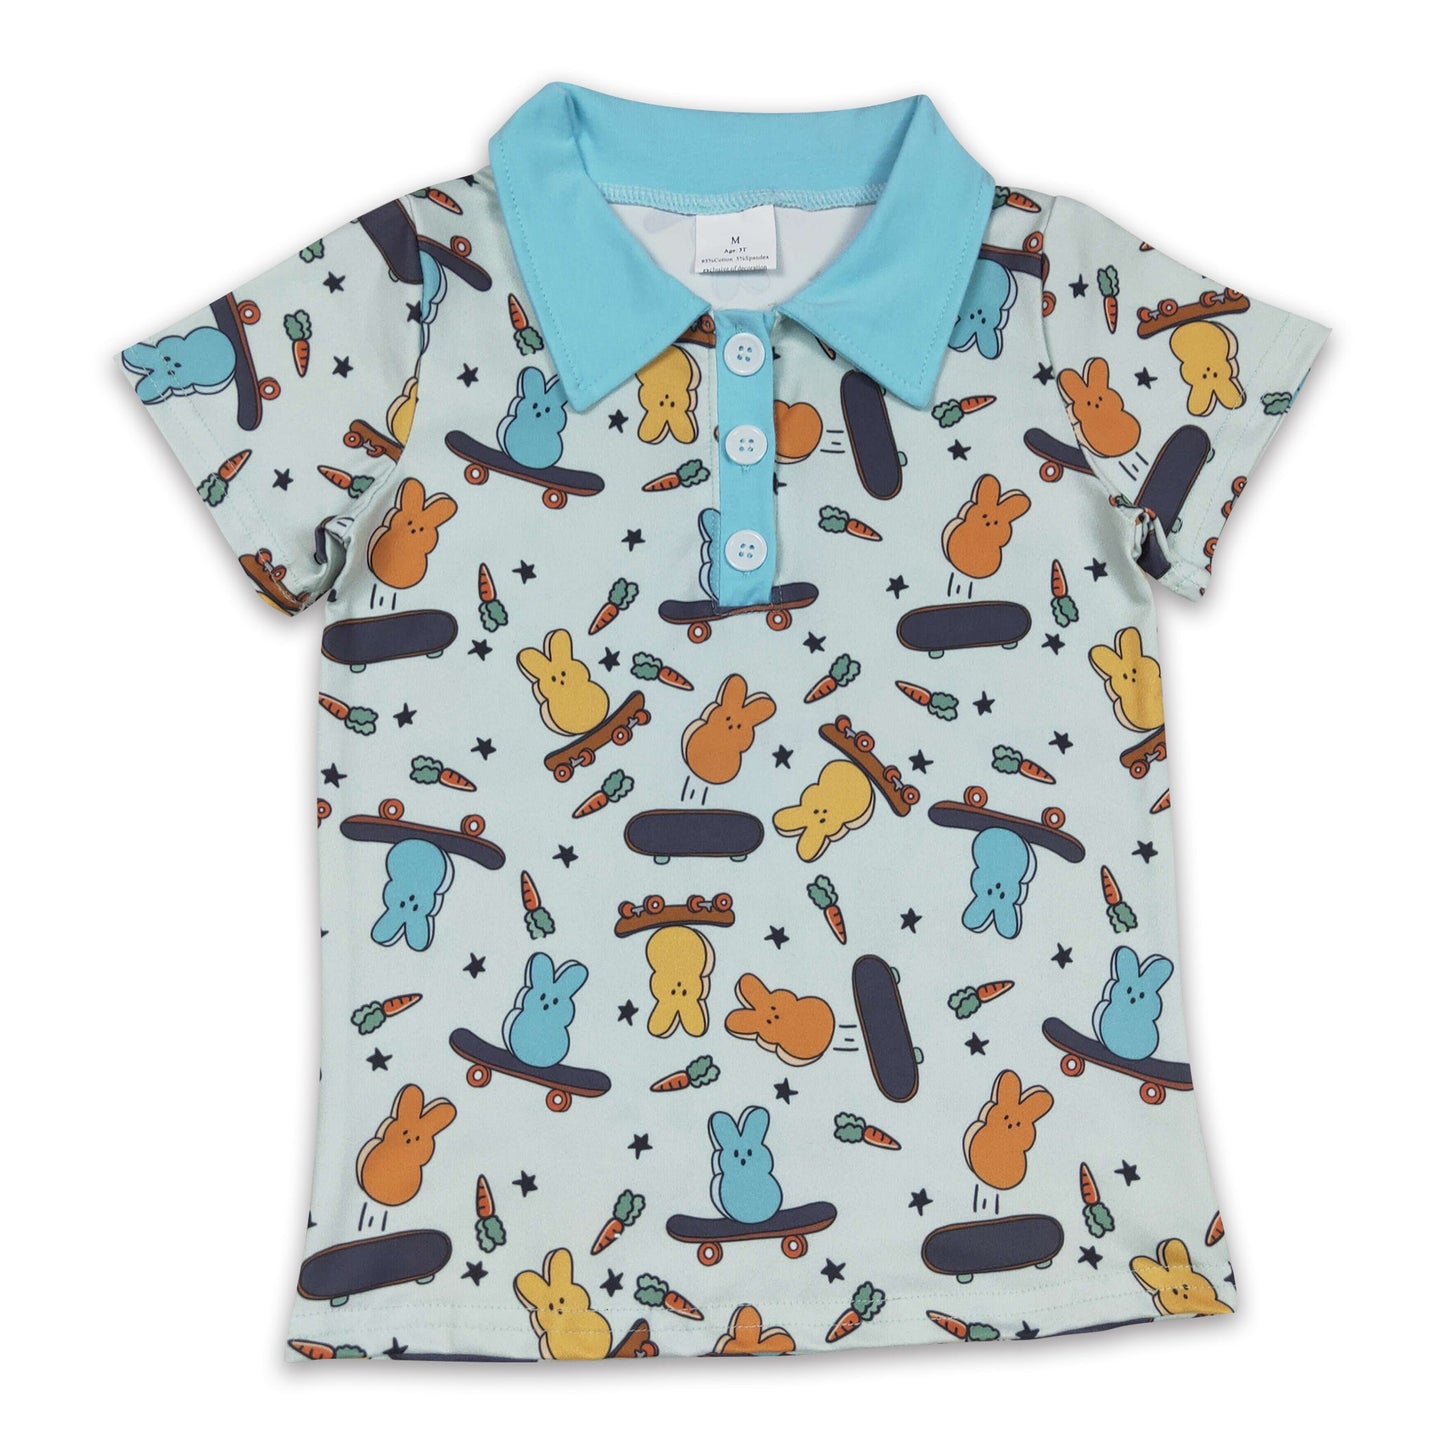 Bunny skateboard short sleeves kids boy easter polo shirt